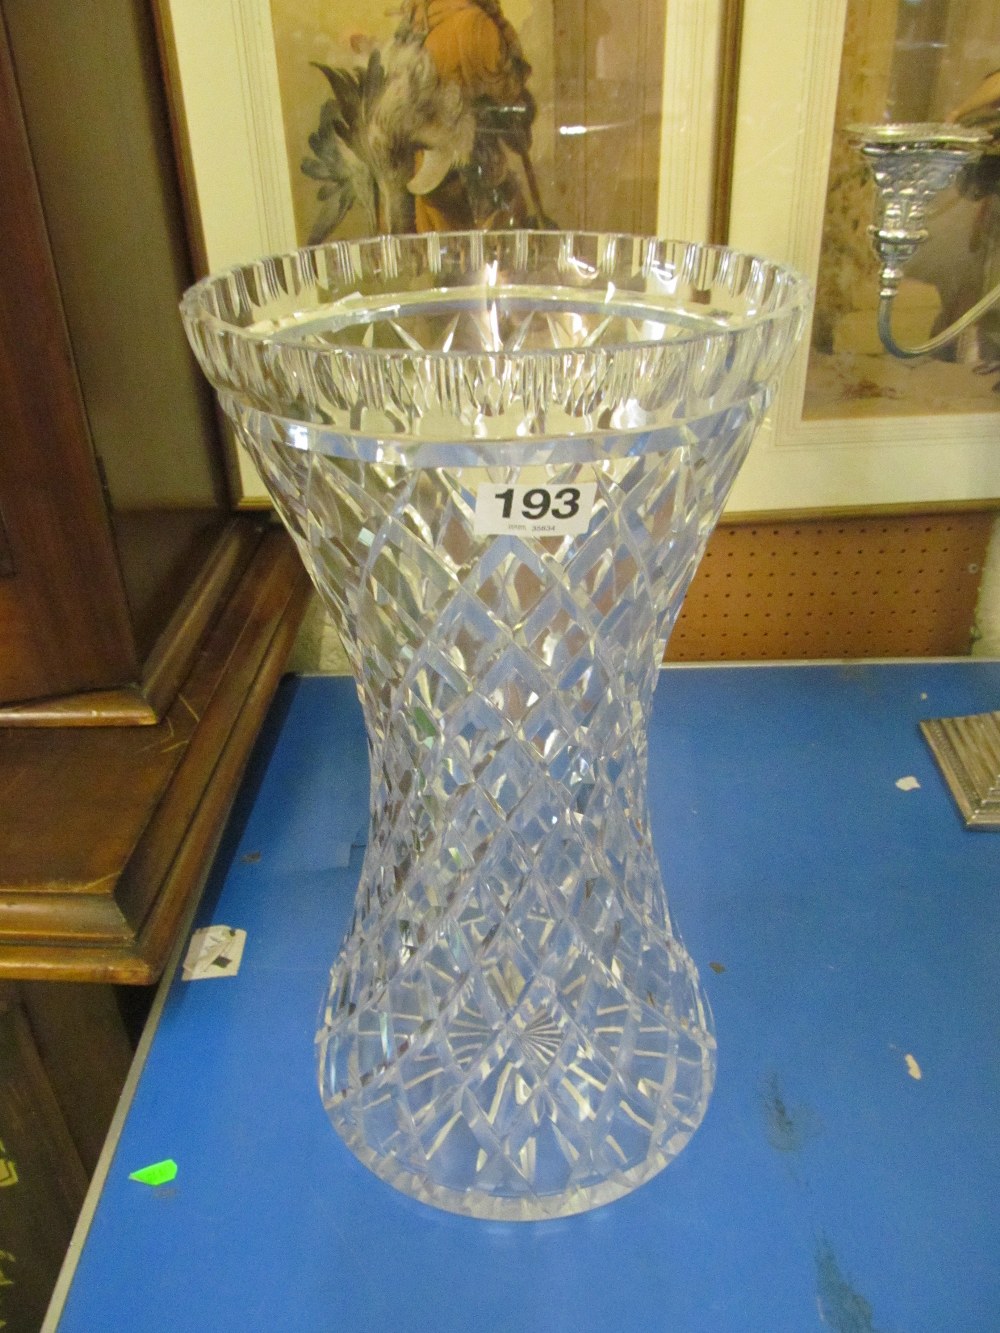 A tall cut glass vase